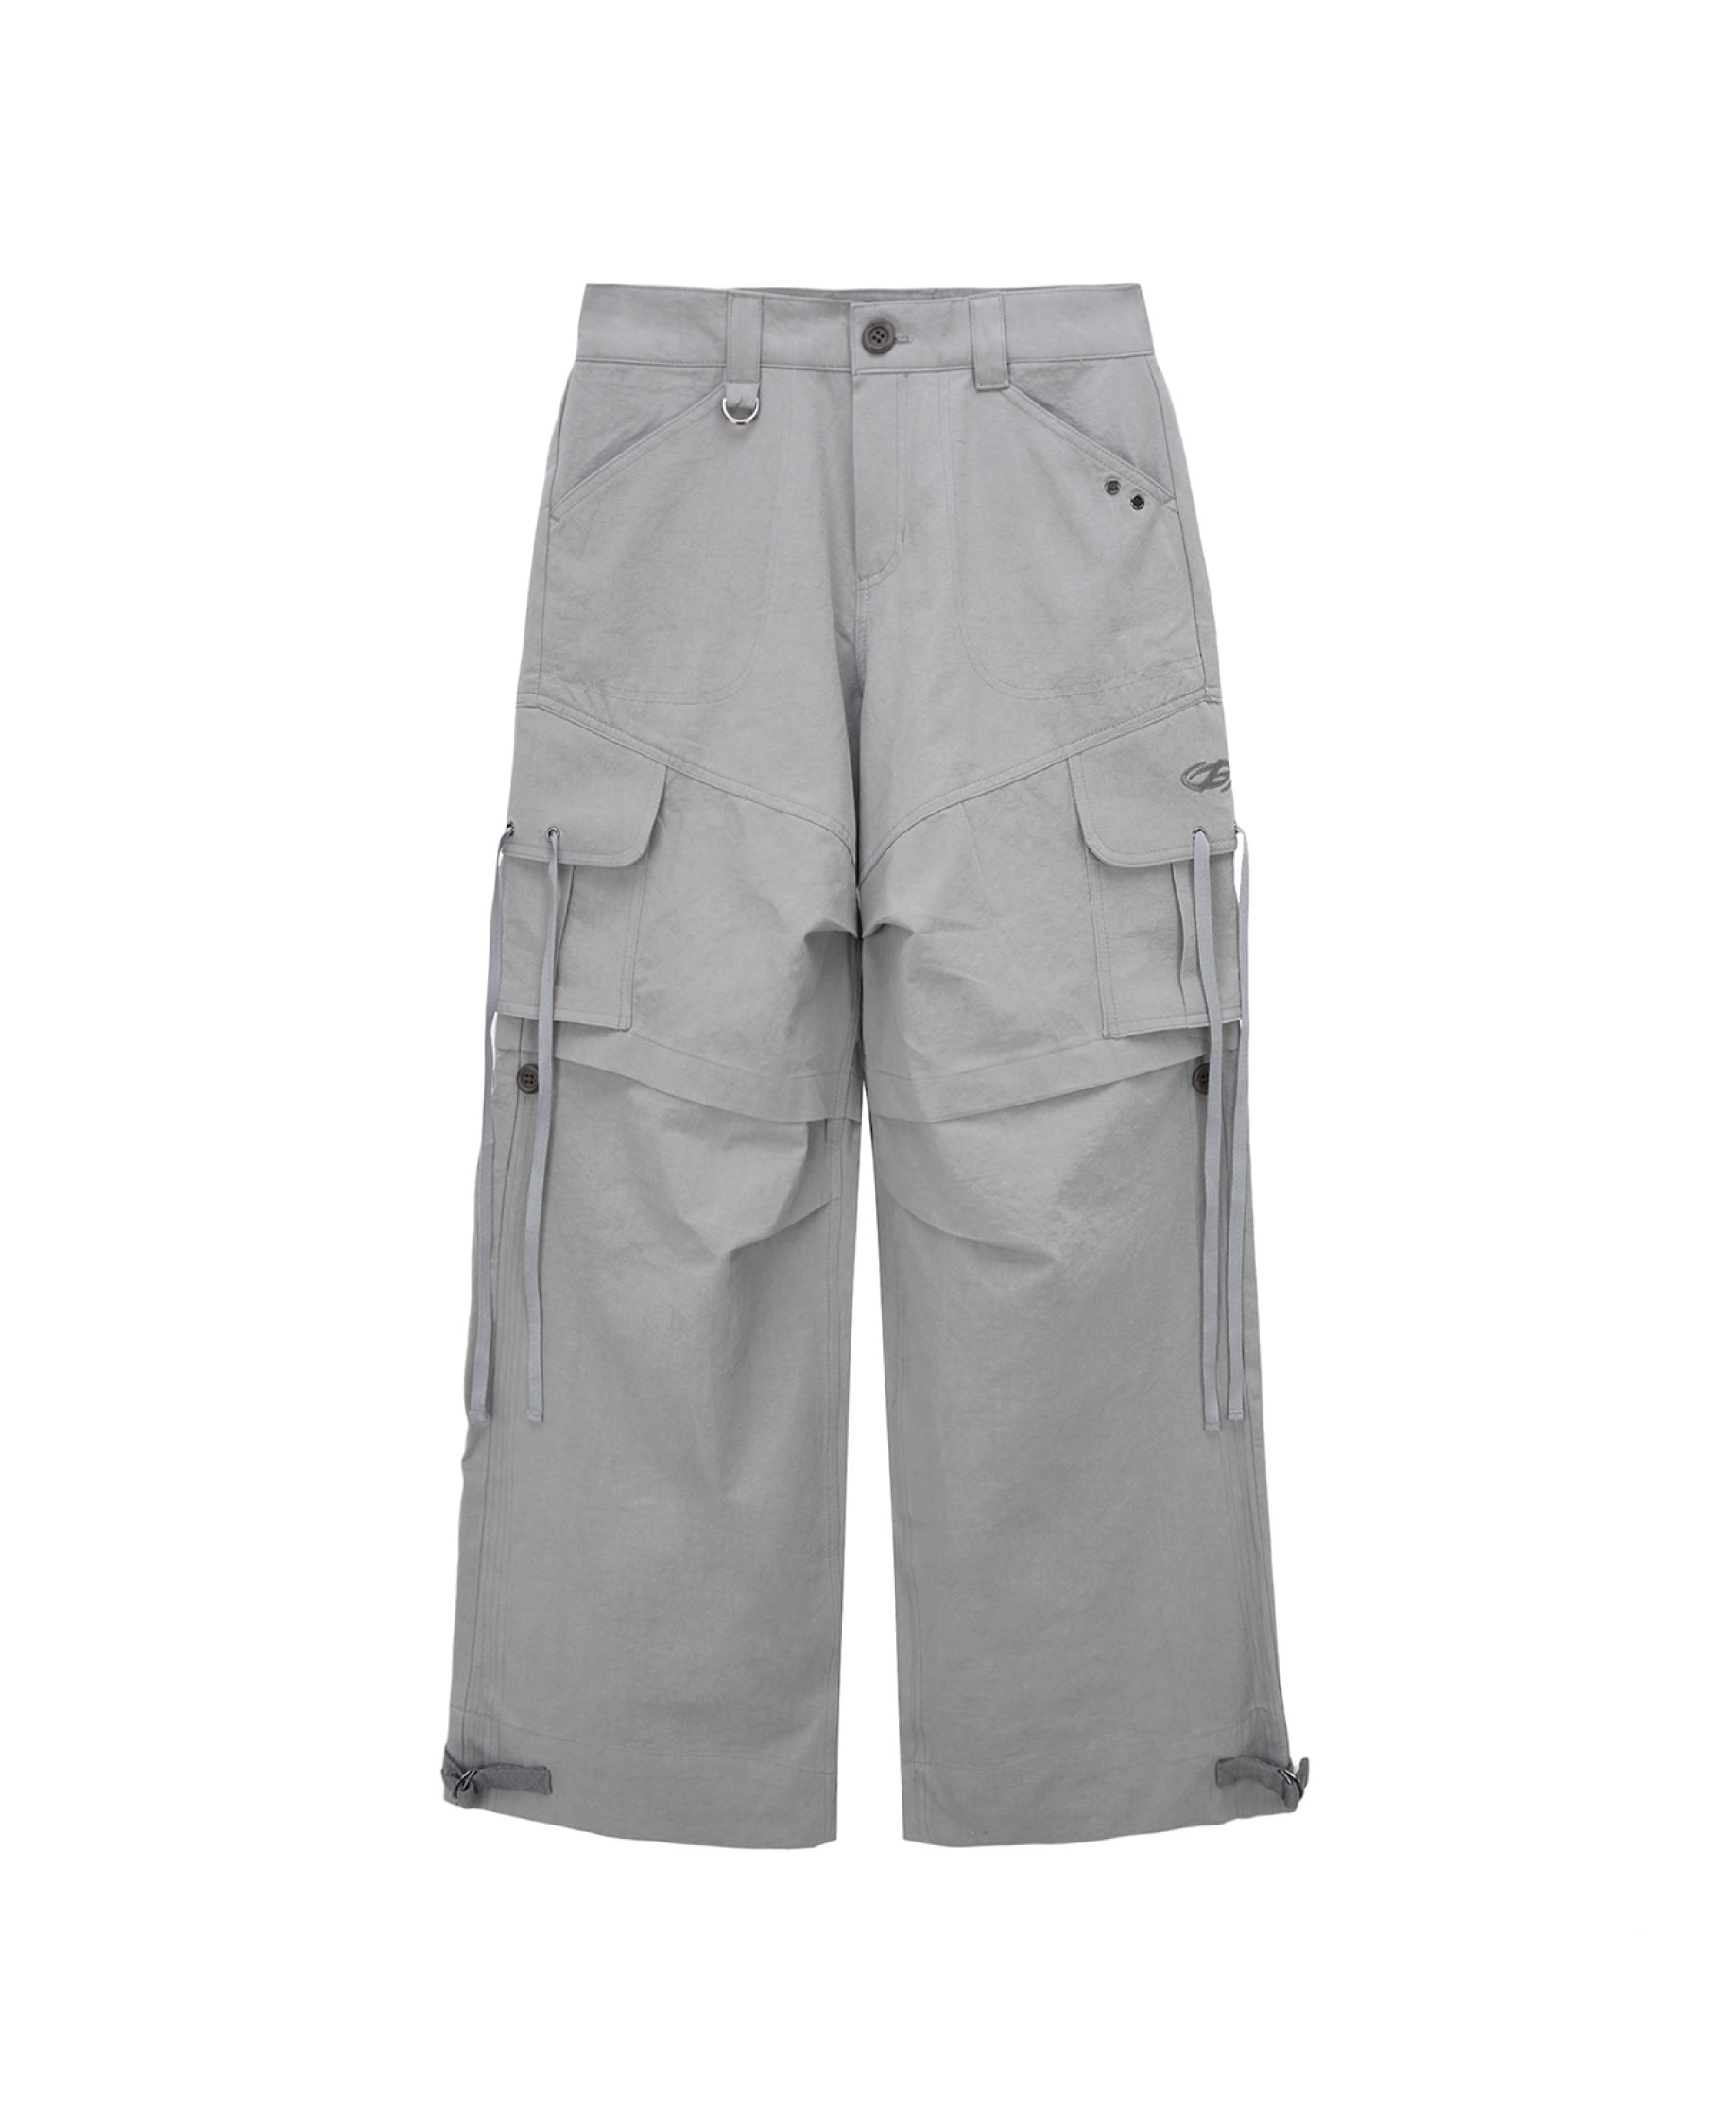 Wide cargo pants (gray)